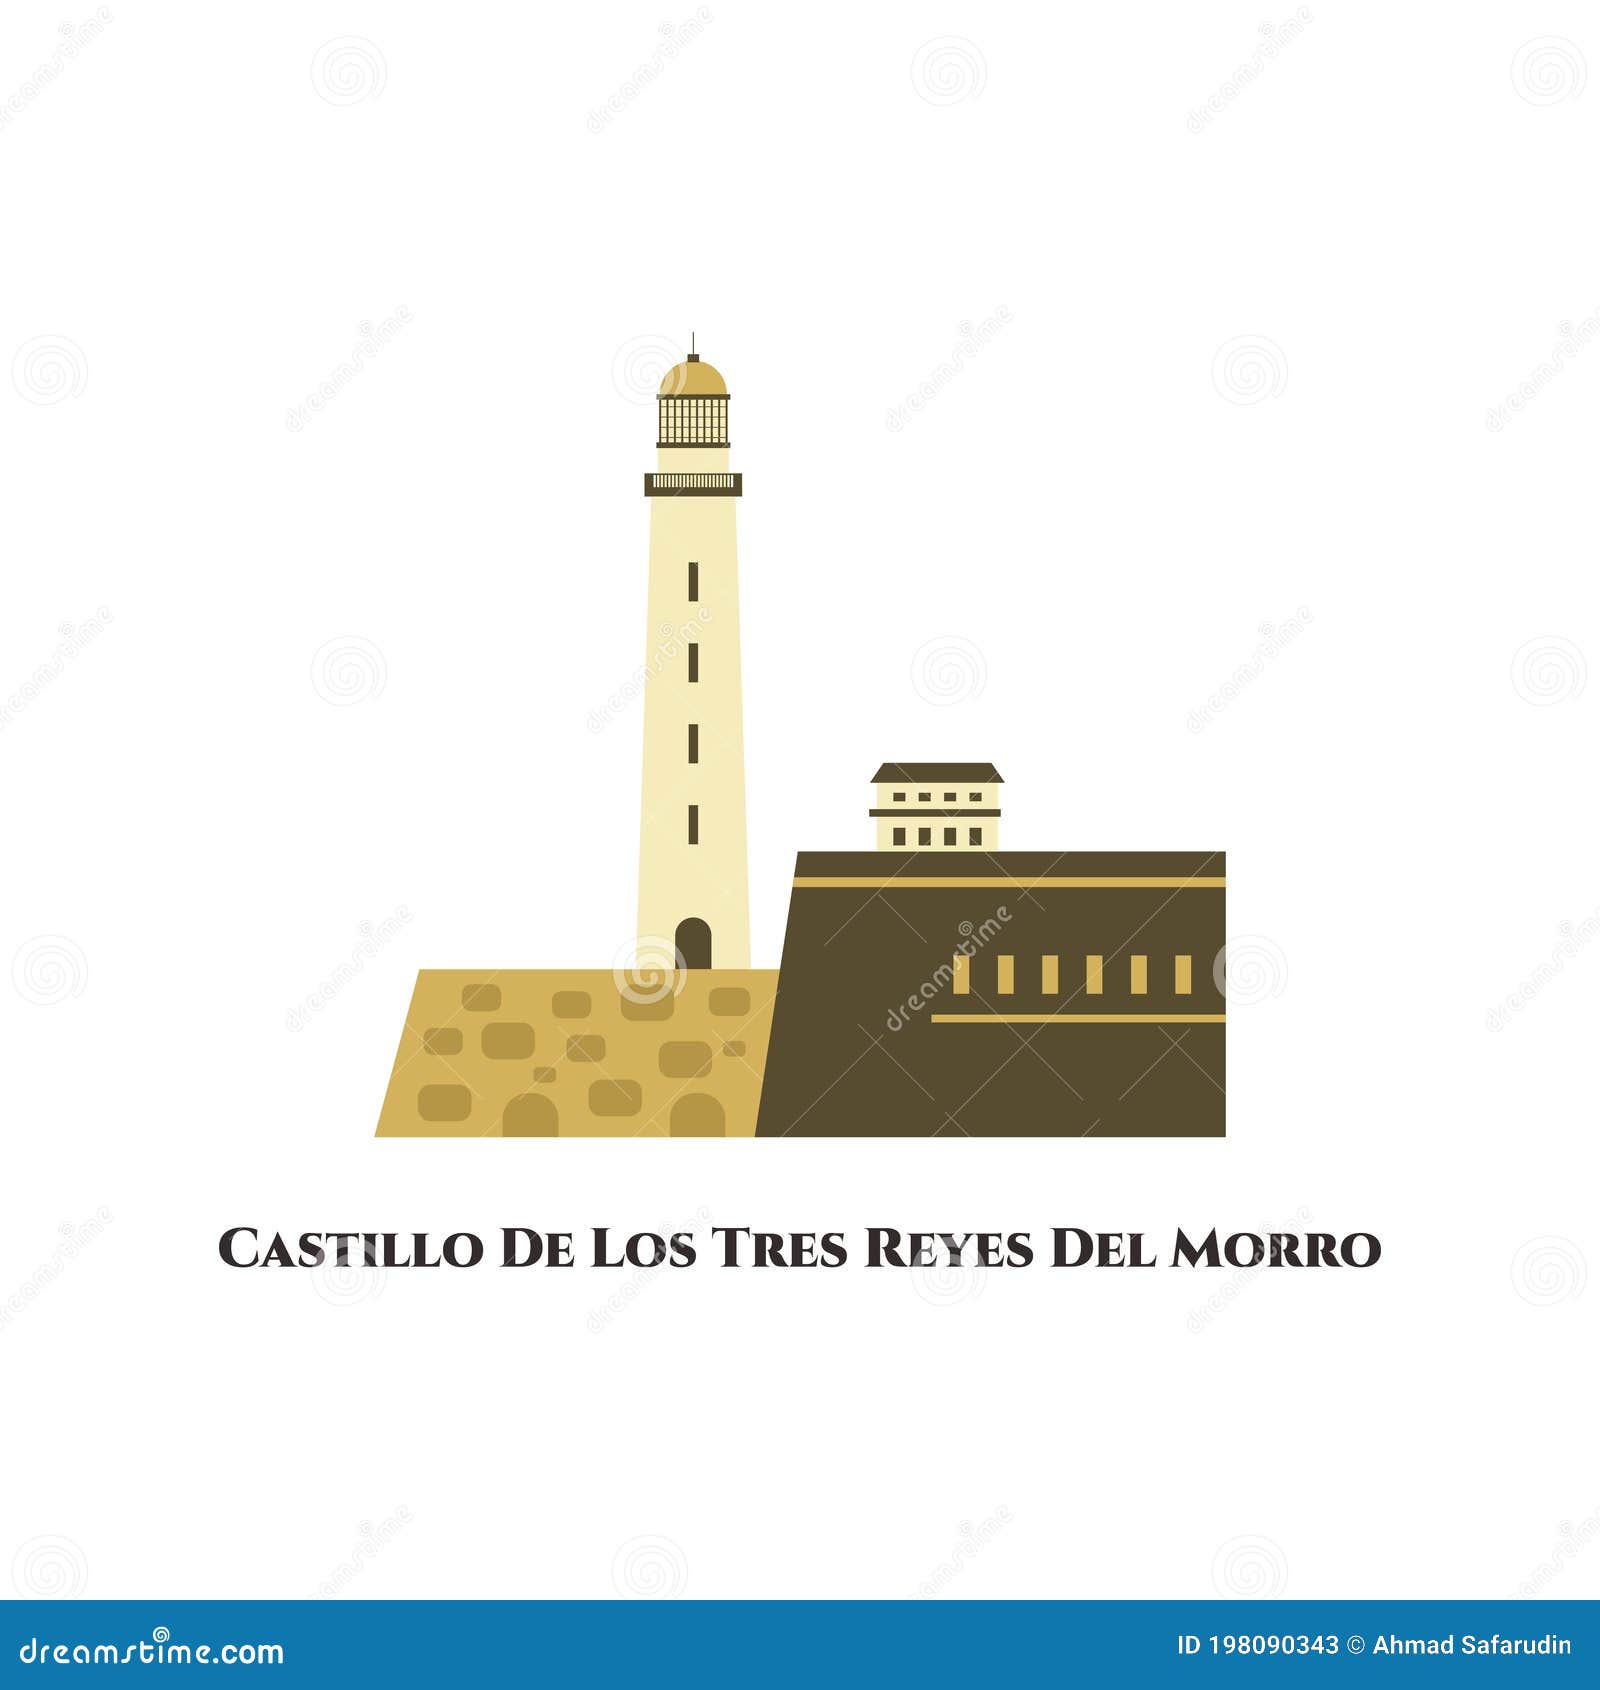 Castillo del Morro: A Historical Fortress in Havana · Visit Cuba